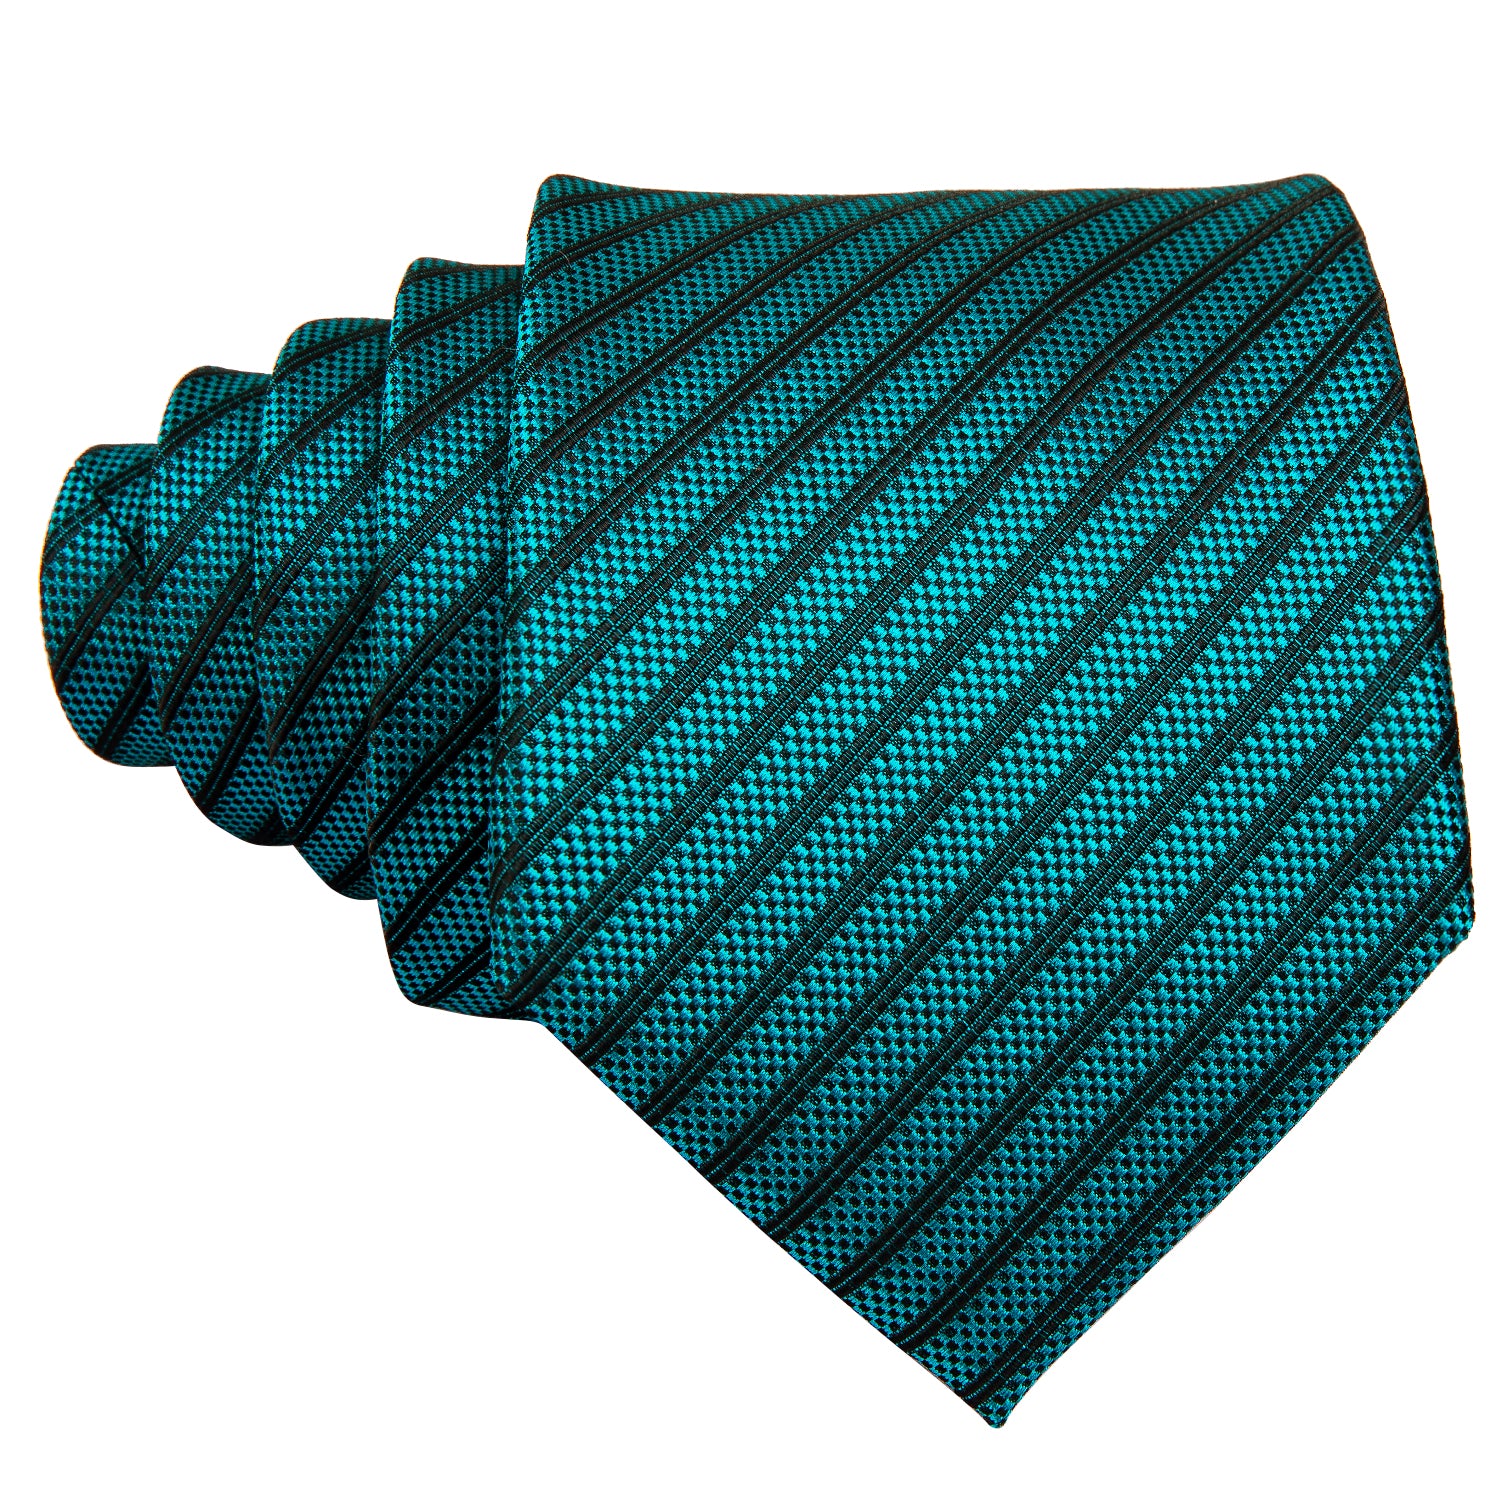 Teal Black Striped Tie Pocket Square Cufflinks Set